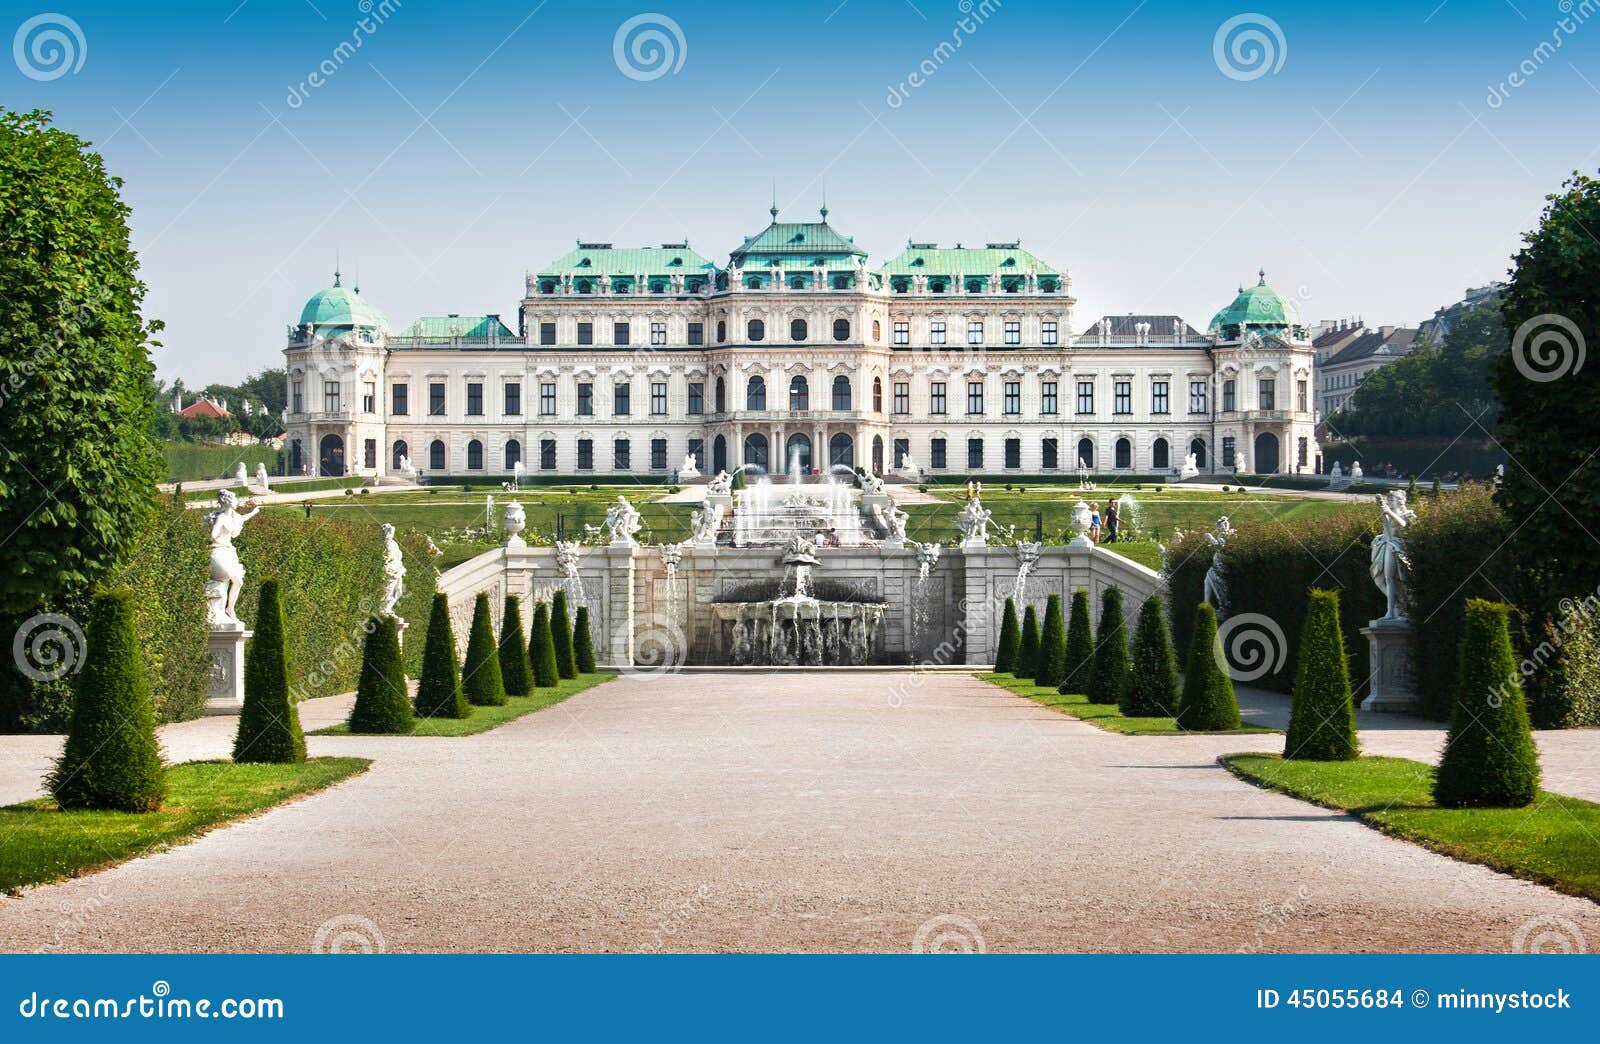 famous schloss belvedere in vienna, austria